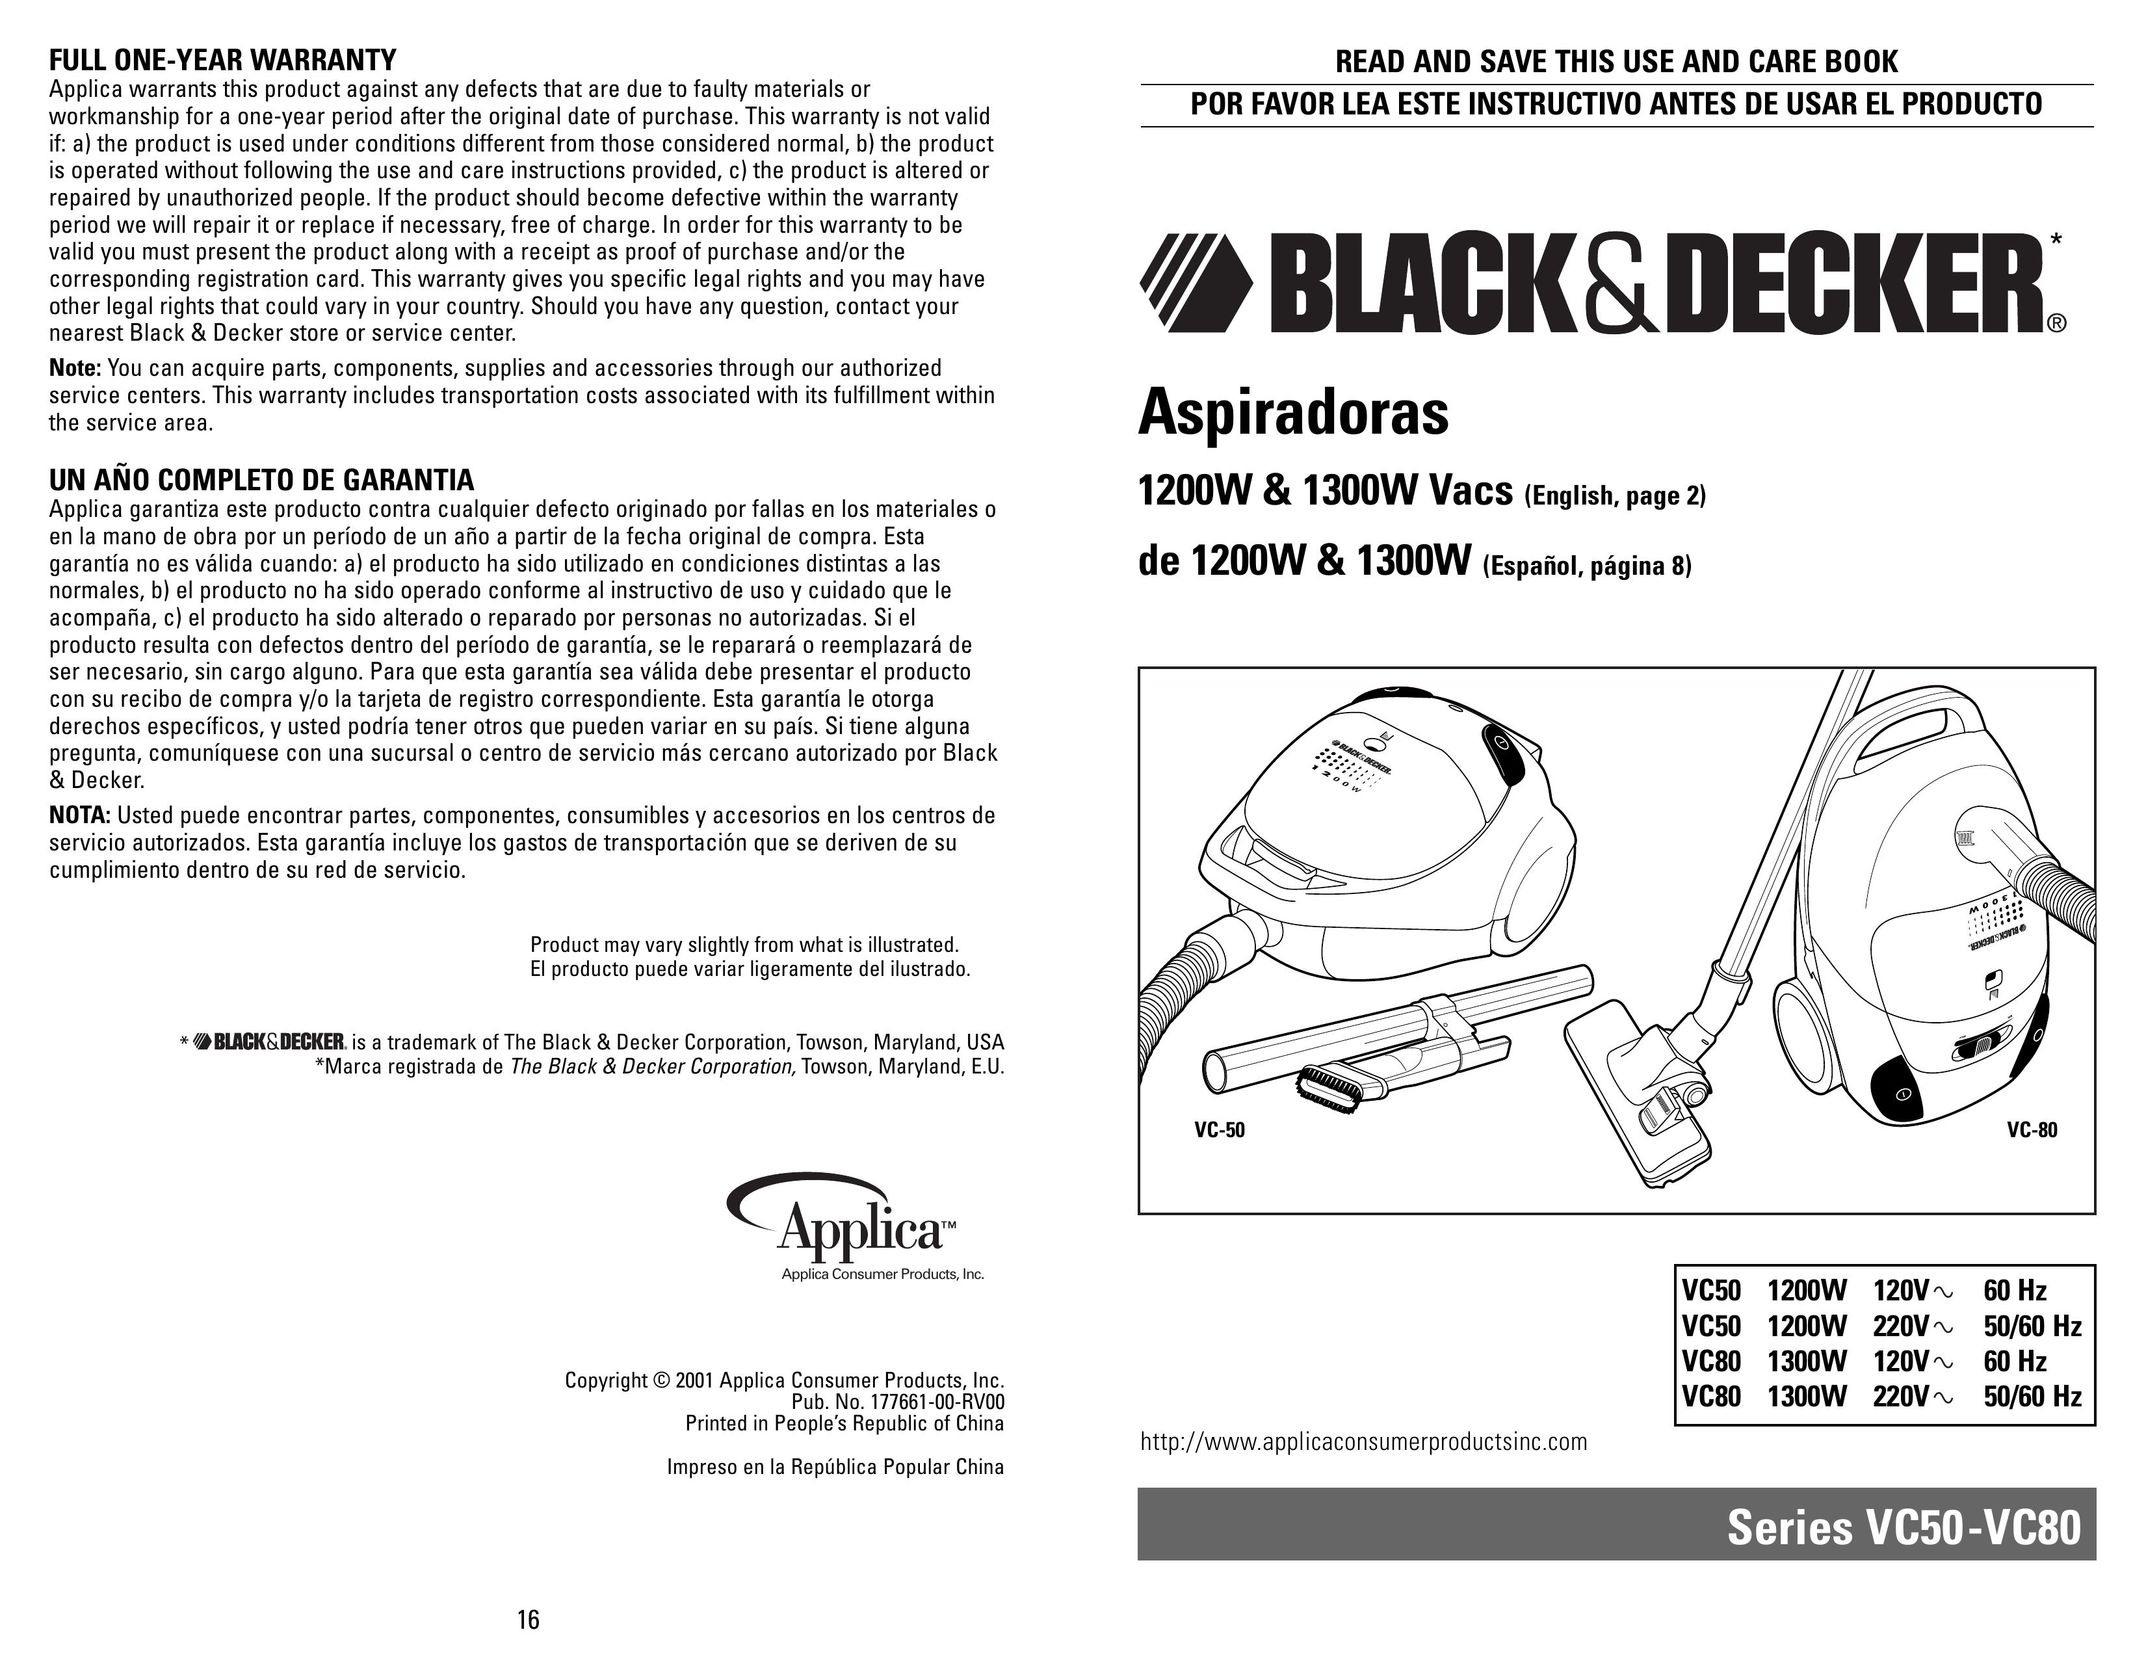 Applica VC80 Vacuum Cleaner User Manual